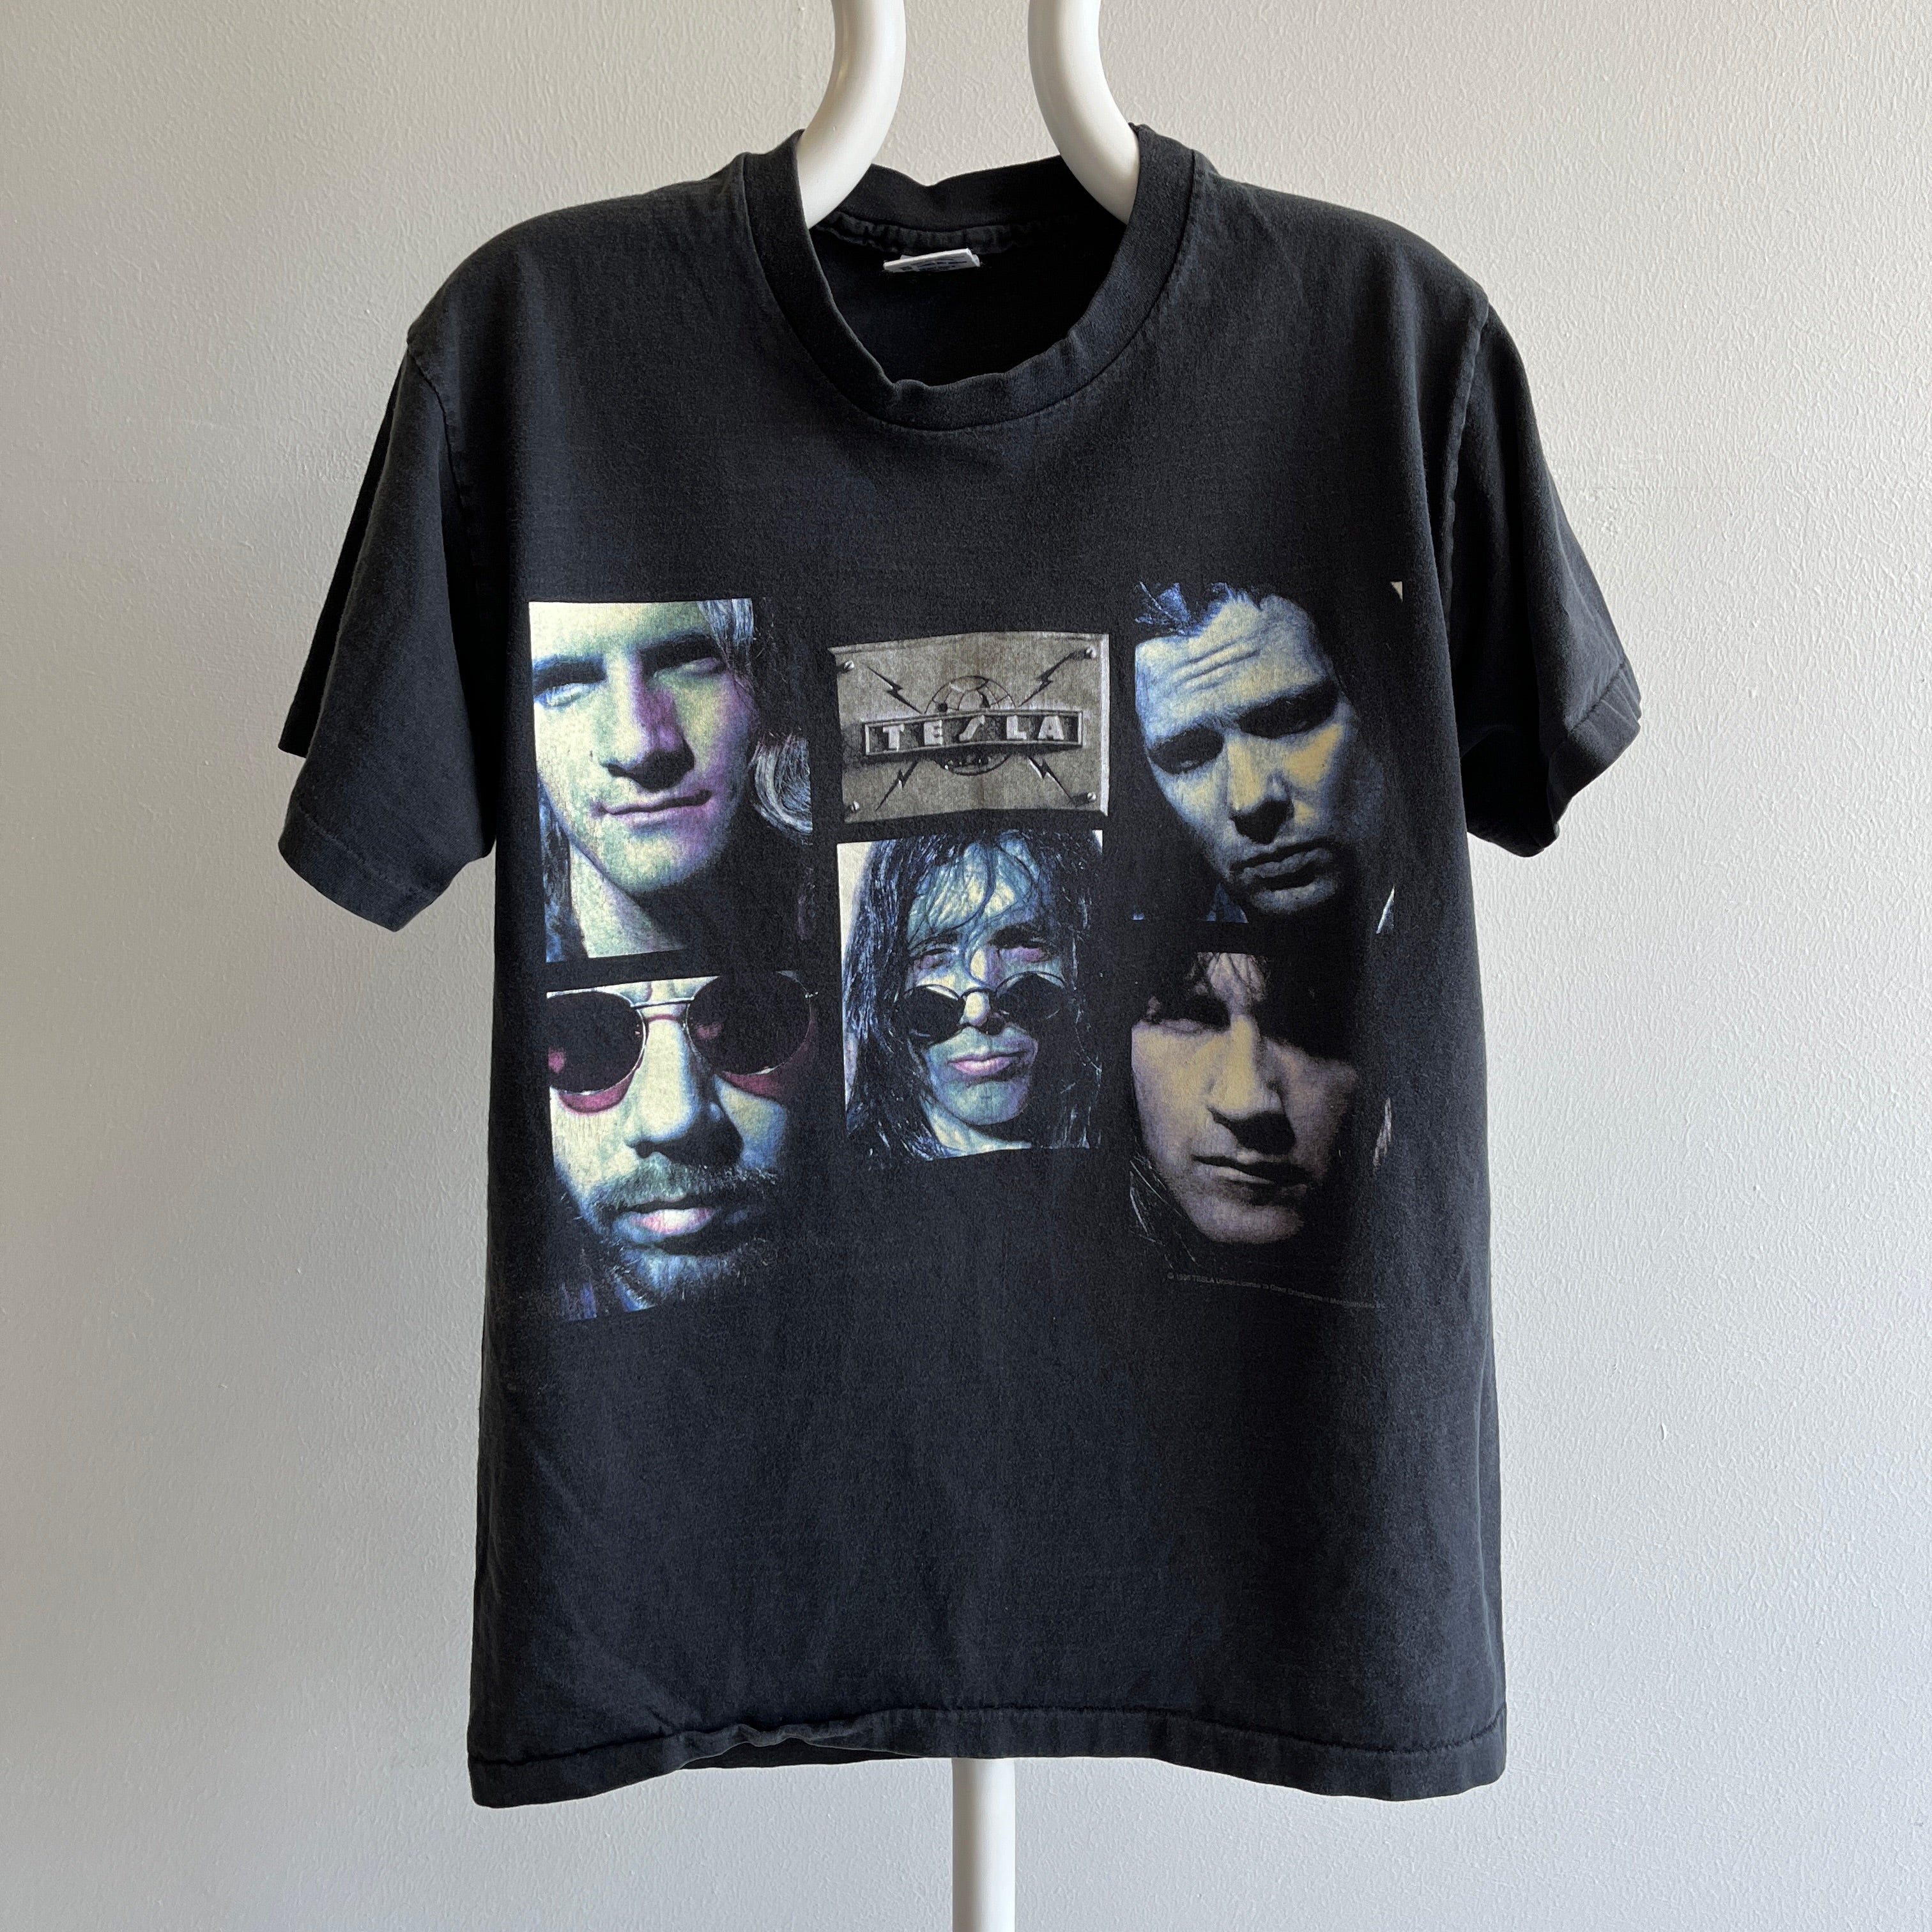 1995 Tesla - Bust A Nut - Le groupe - T-shirt